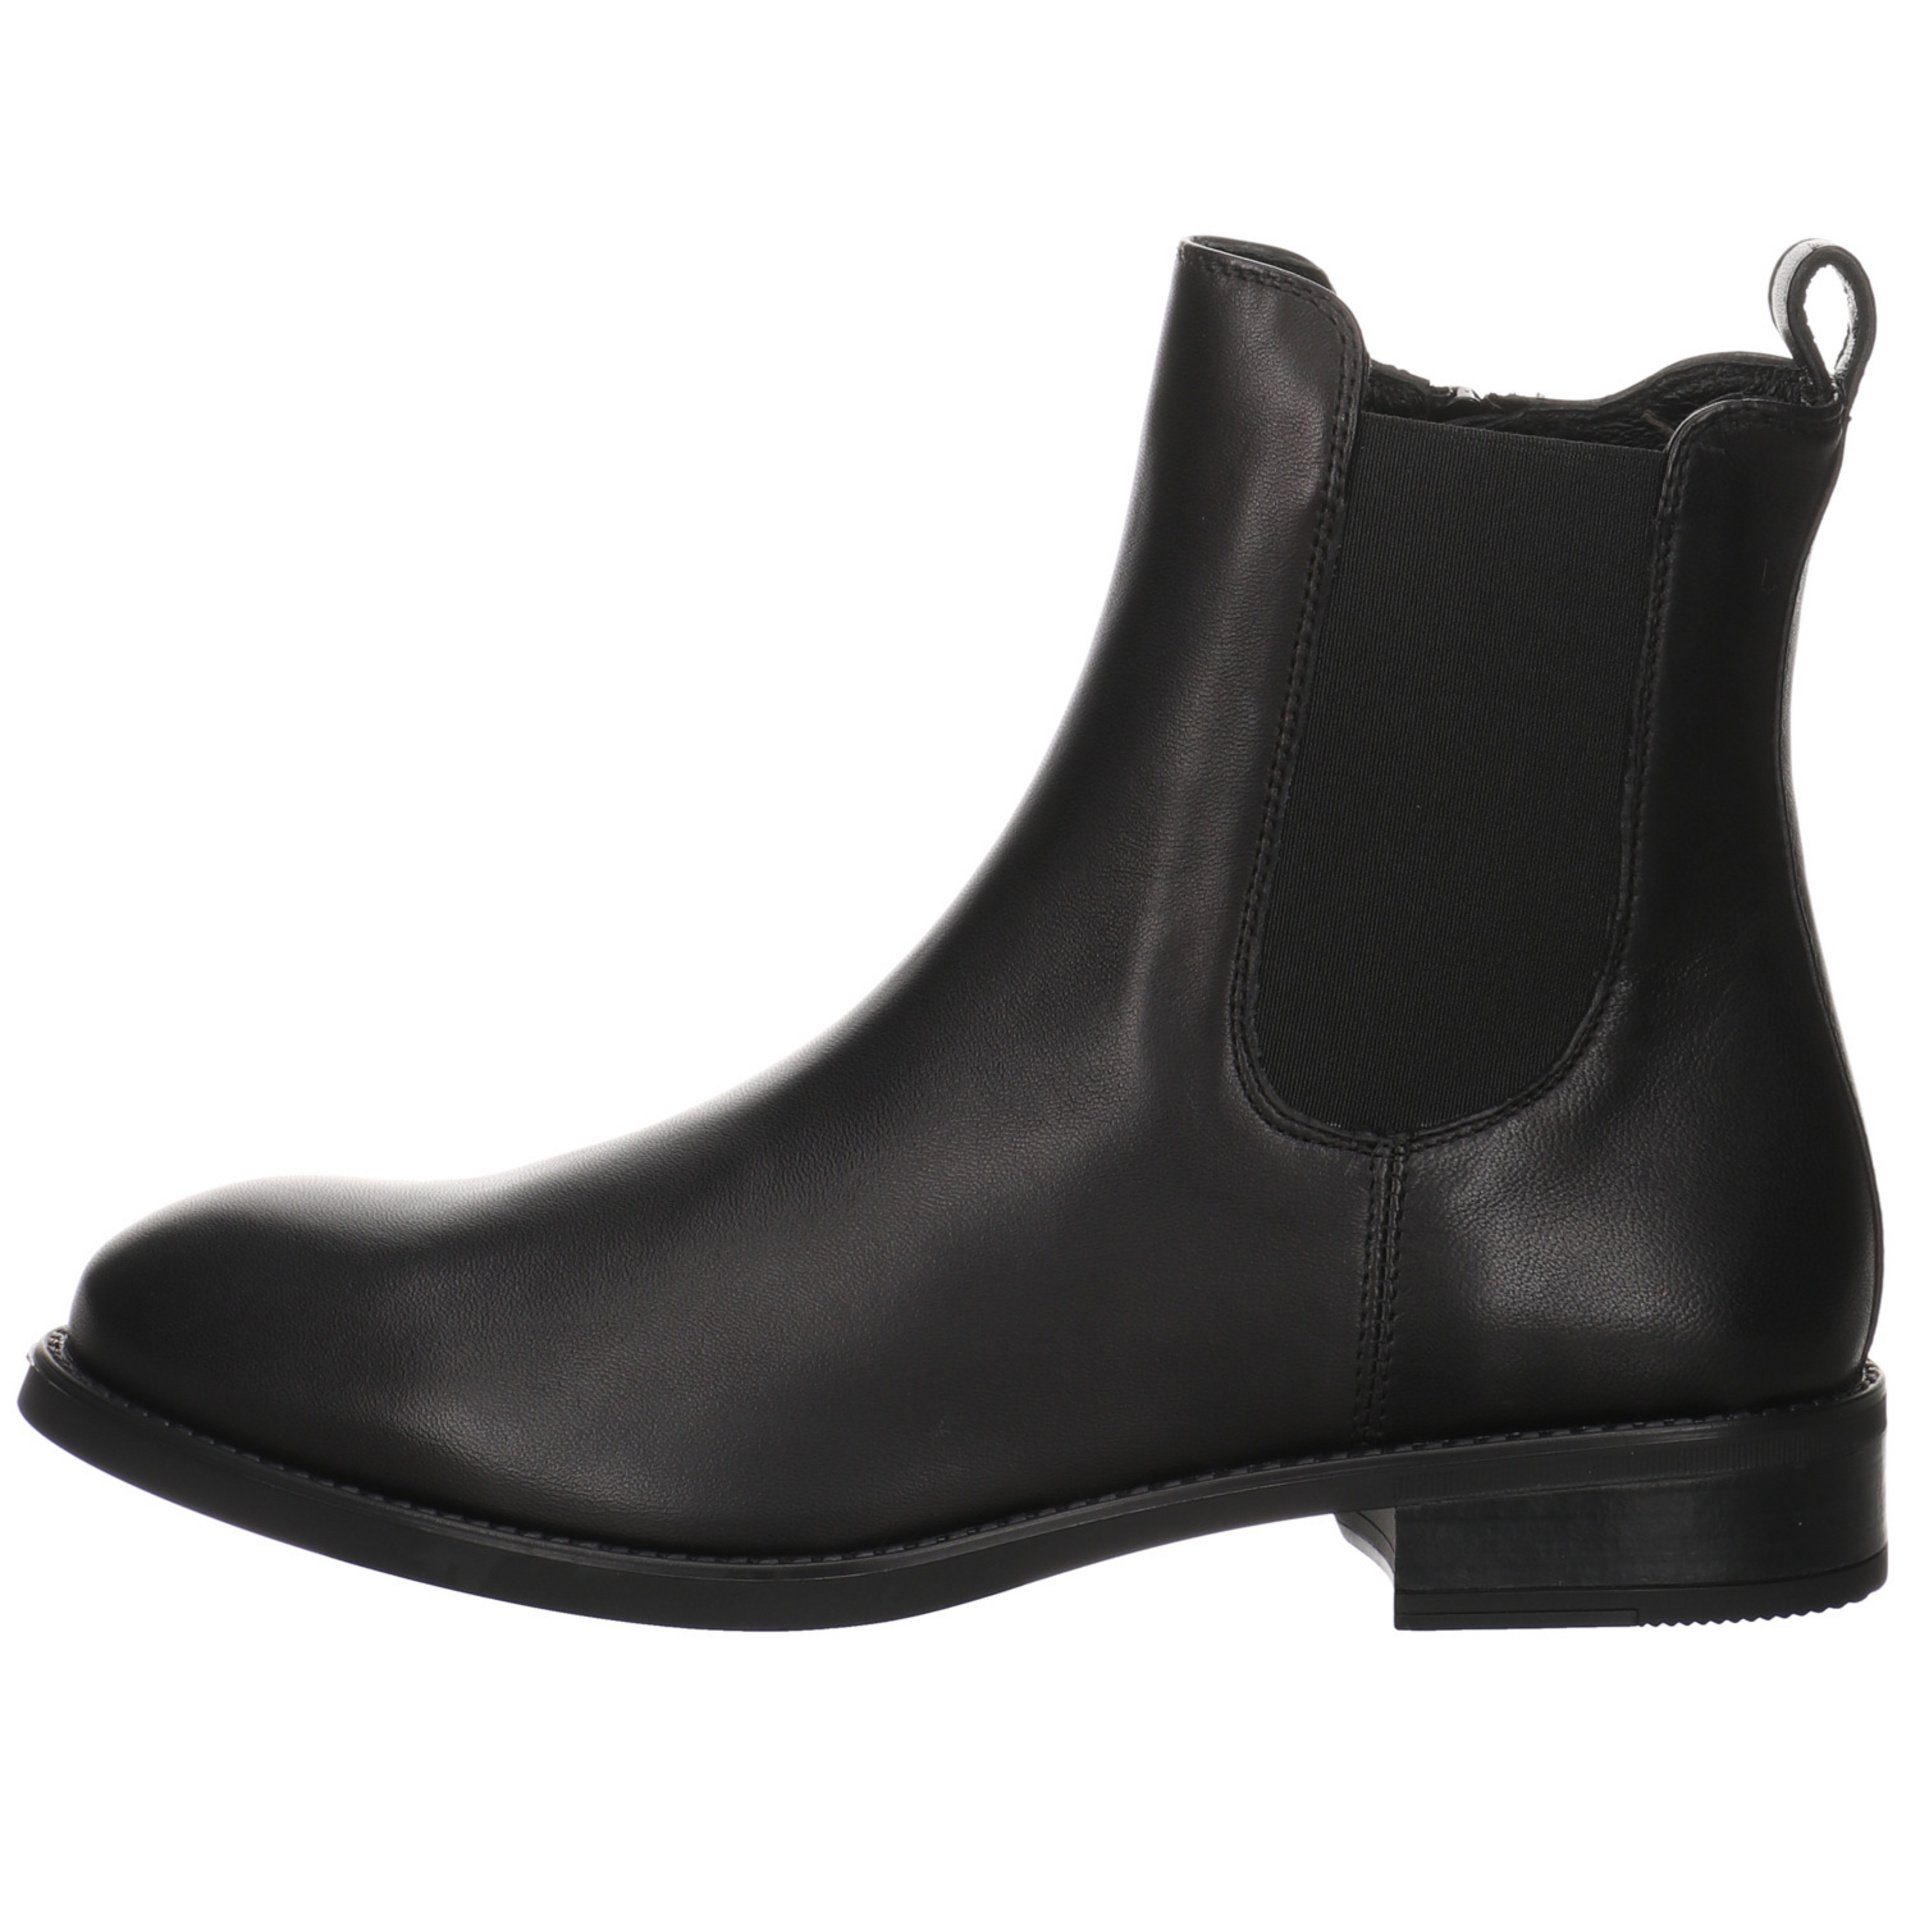 Leder-/Textilkombination Stiefelette Schuhe Stiefeletten Chelsea Unisa black Boots Barty Damen